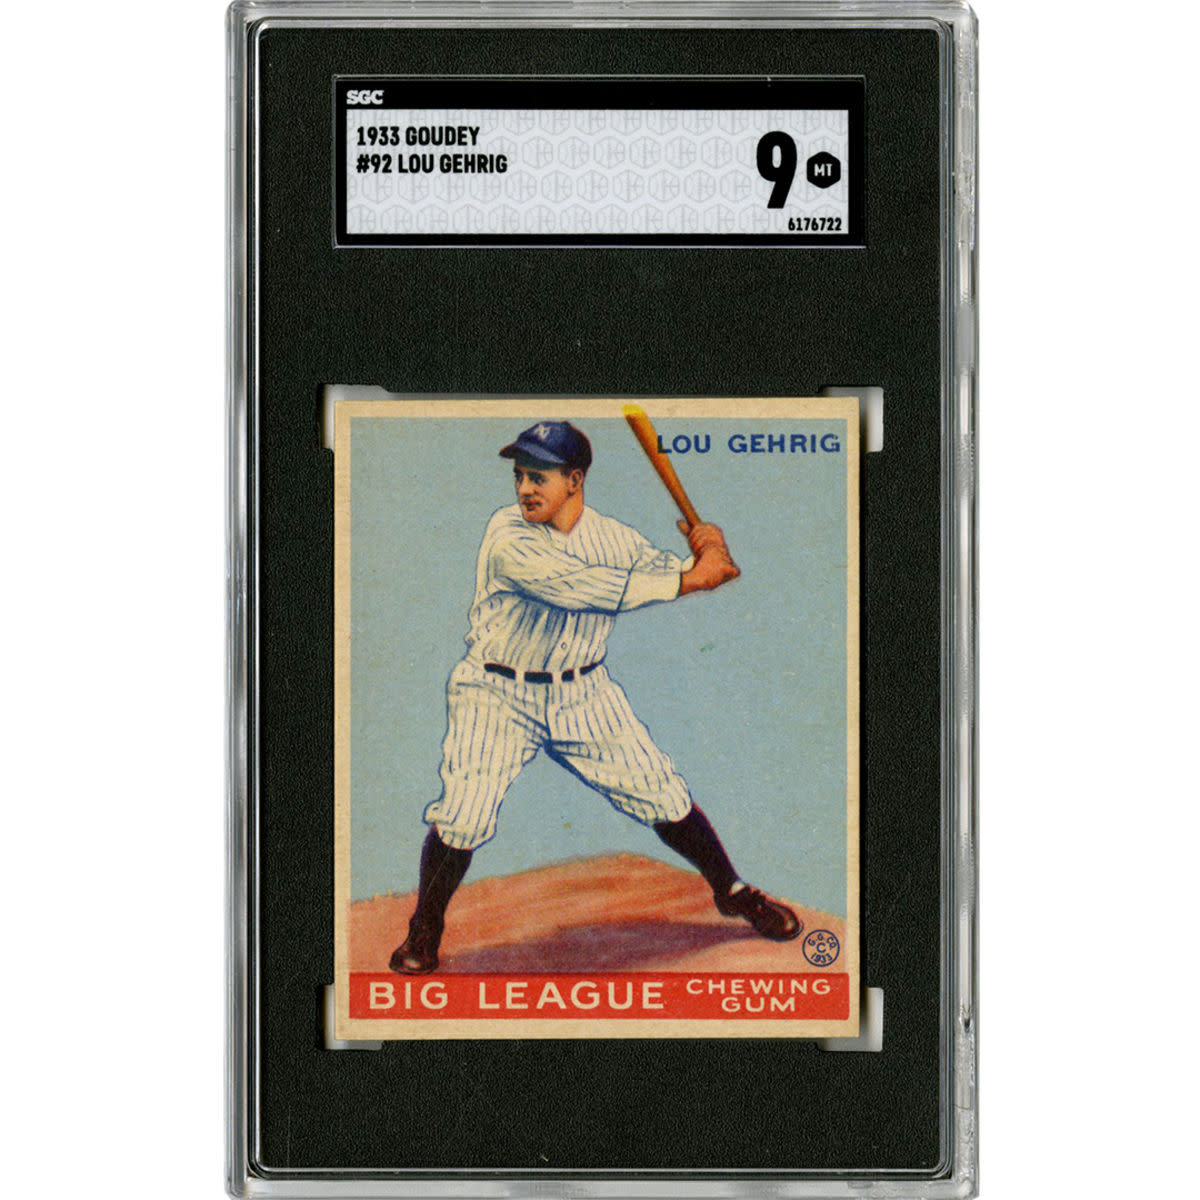  Edgar Martinez 1989 Score1989 ROOKIE MLB Card #637